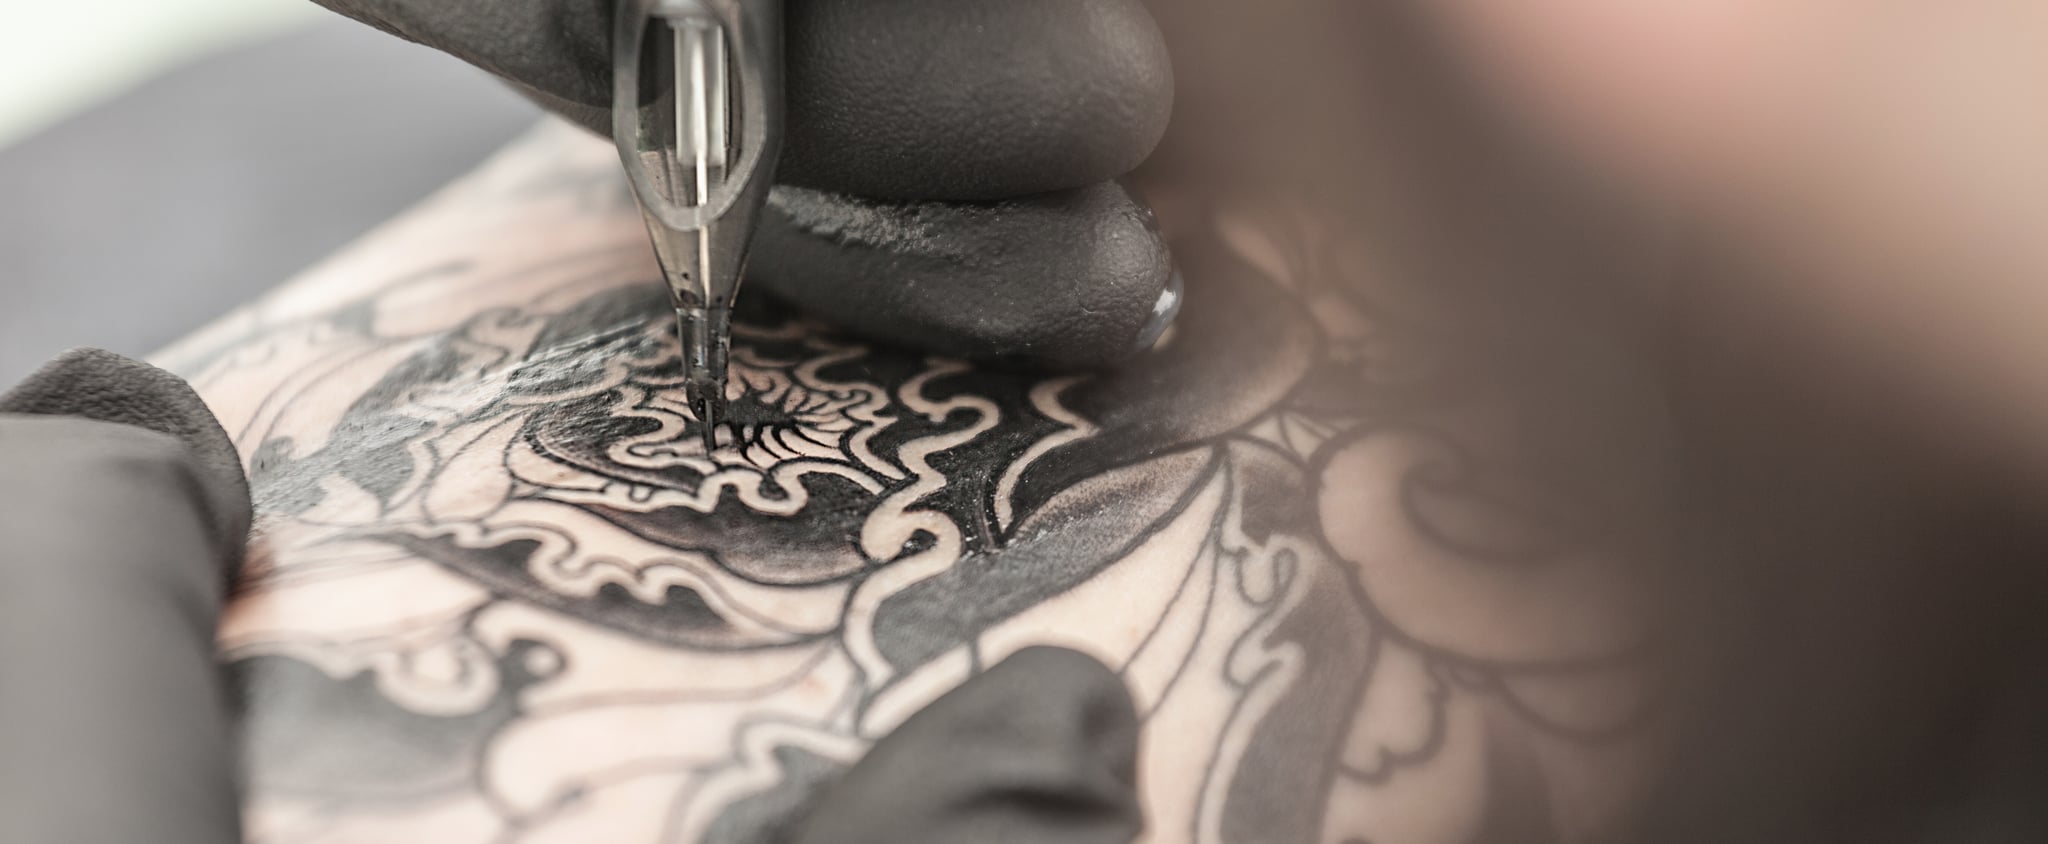 Negative space a sleeve tattoo  Balinesia Tattoo Studio  Facebook